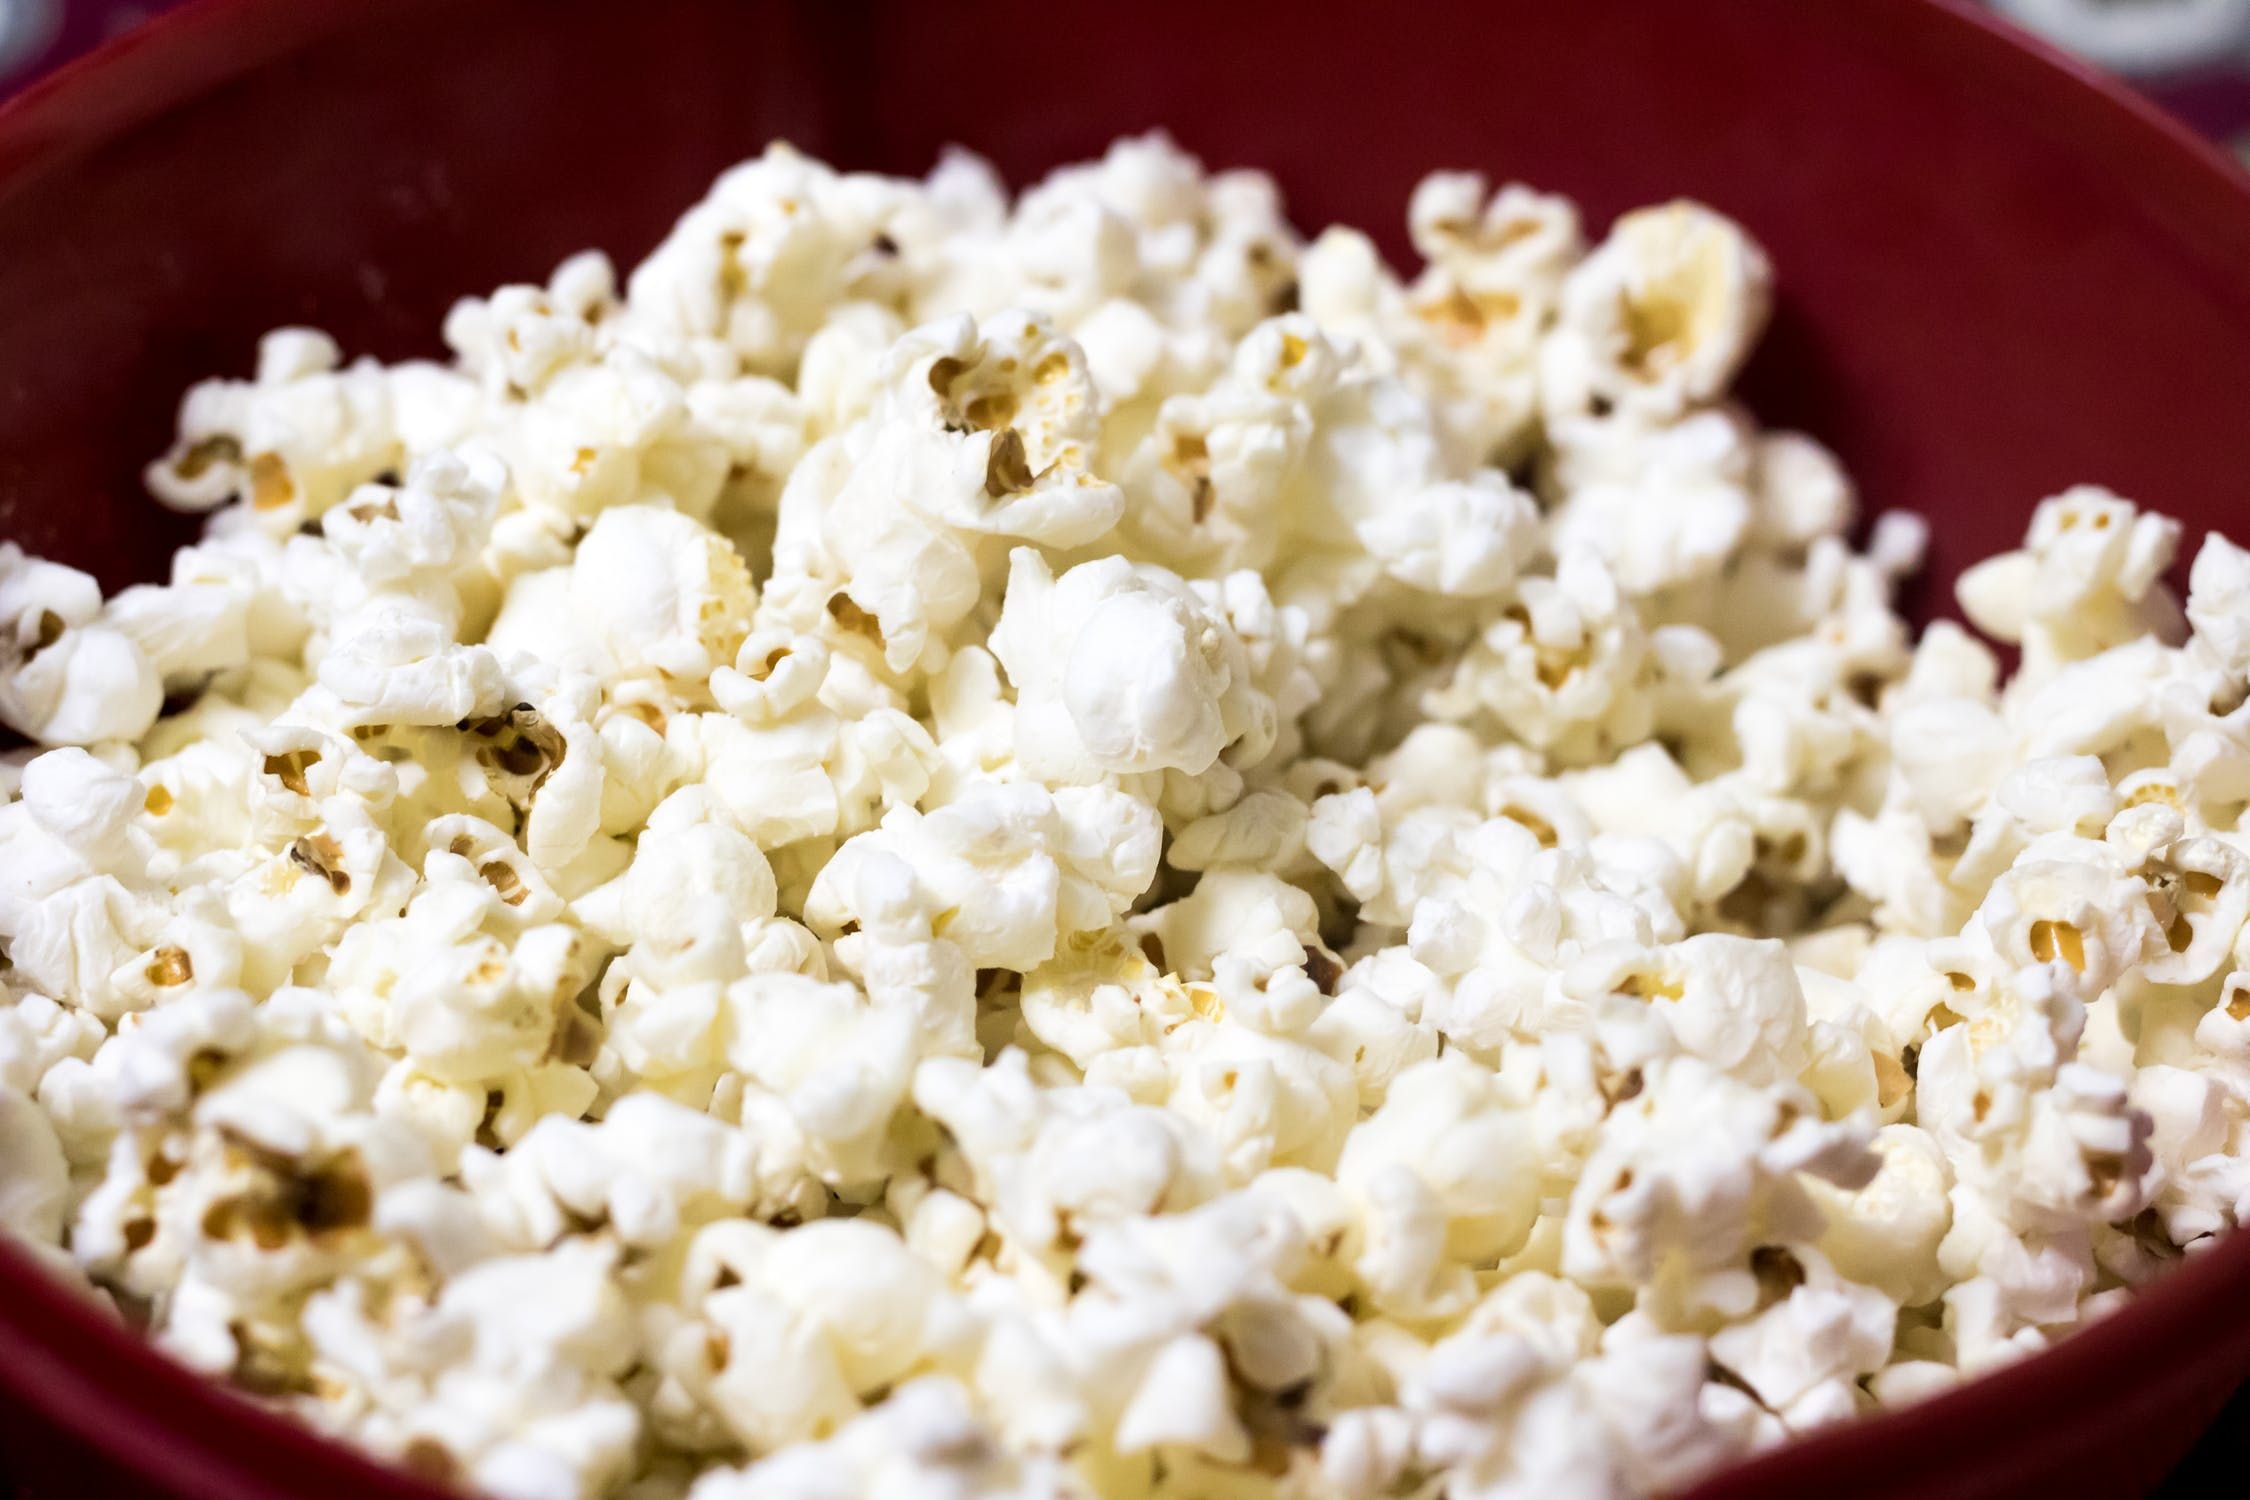 A bowl of popcorn